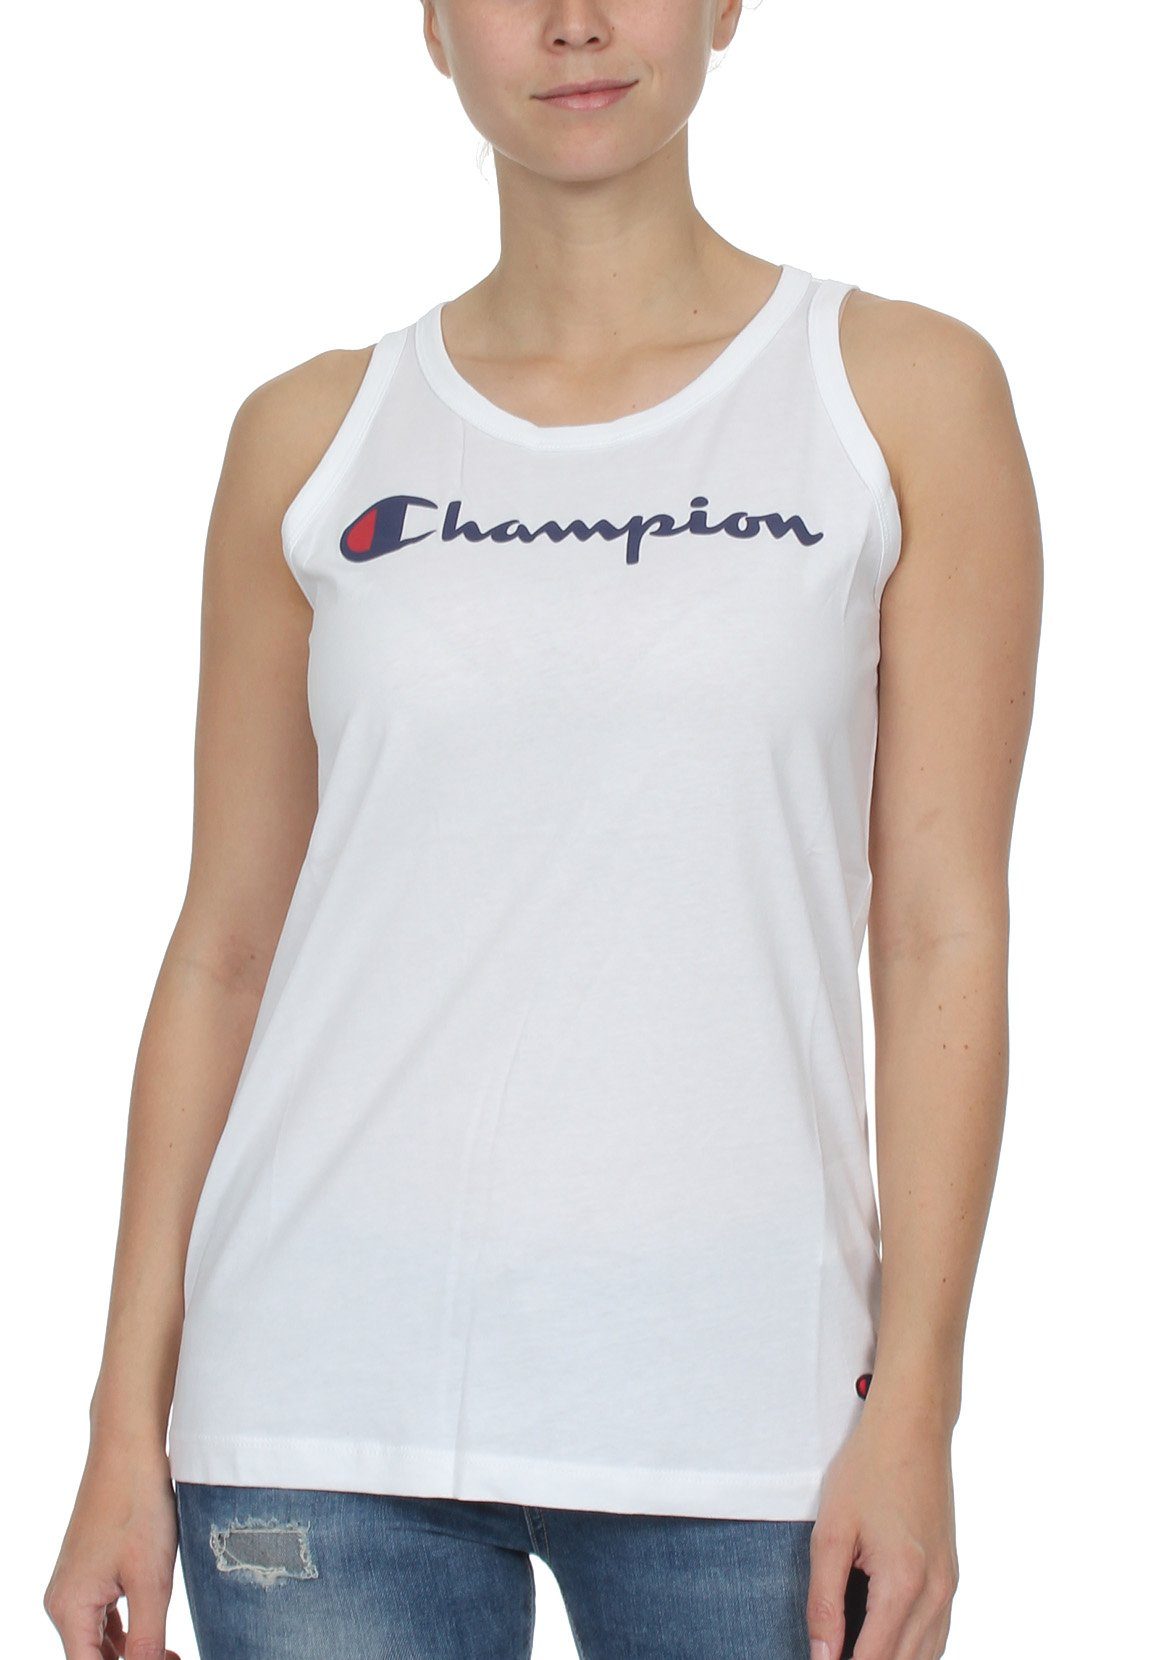 Tanktop Weiss Champion WW001 S19 Champion 111791 T-Shirt Damen WHT